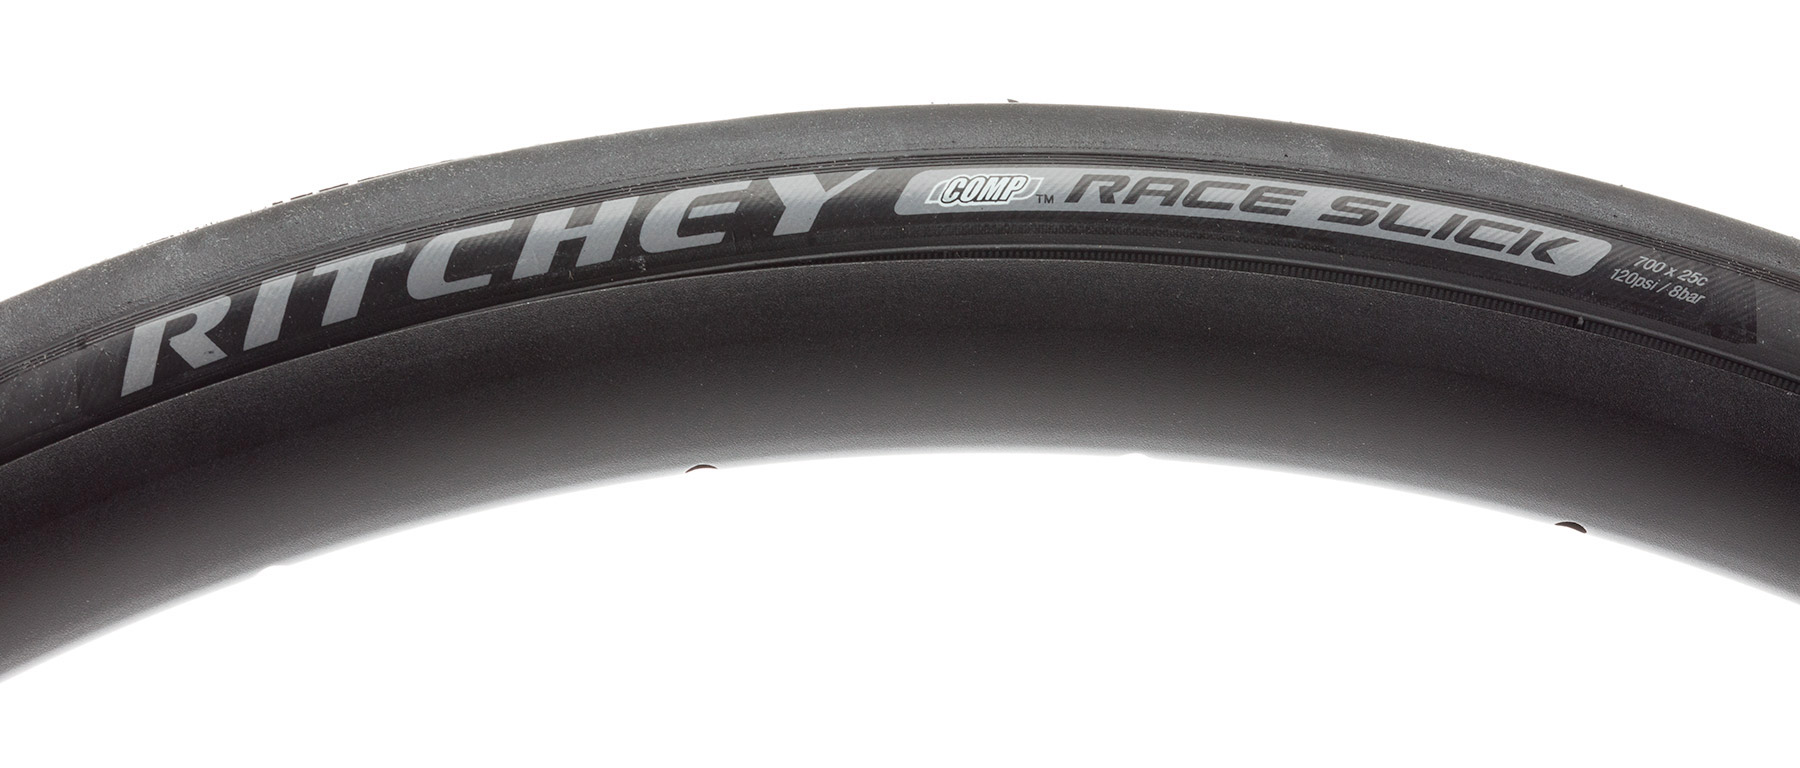 Ritchey Comp Race Slick Road Tire